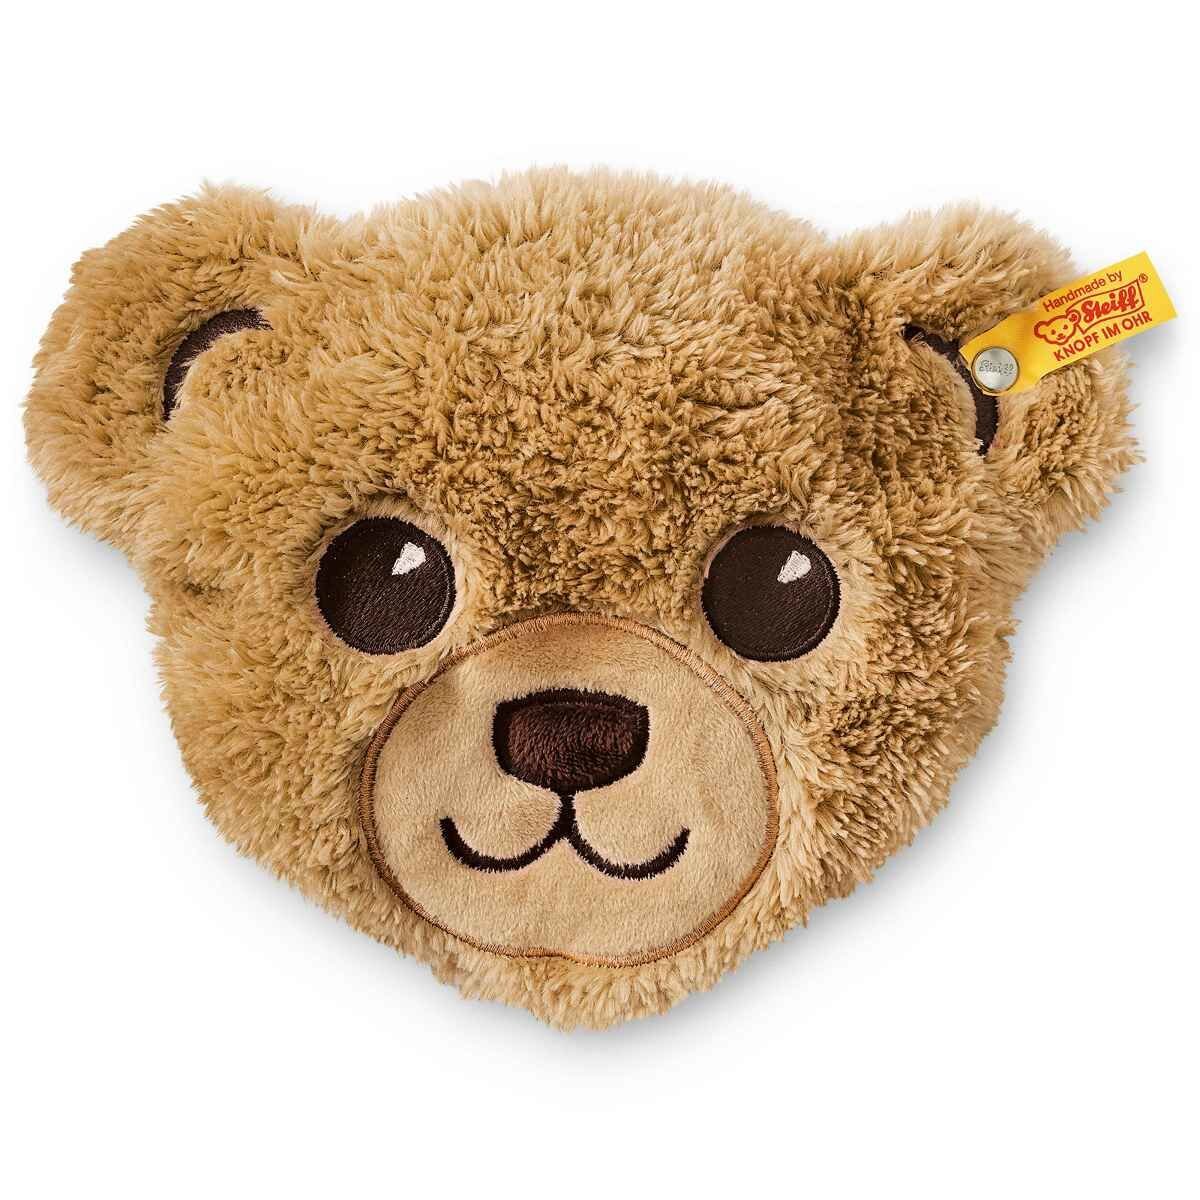 Грелка-мишка Steiff. Голова медведя игрушка. Мишка игрушка голова. Голова плюшевого медведя.